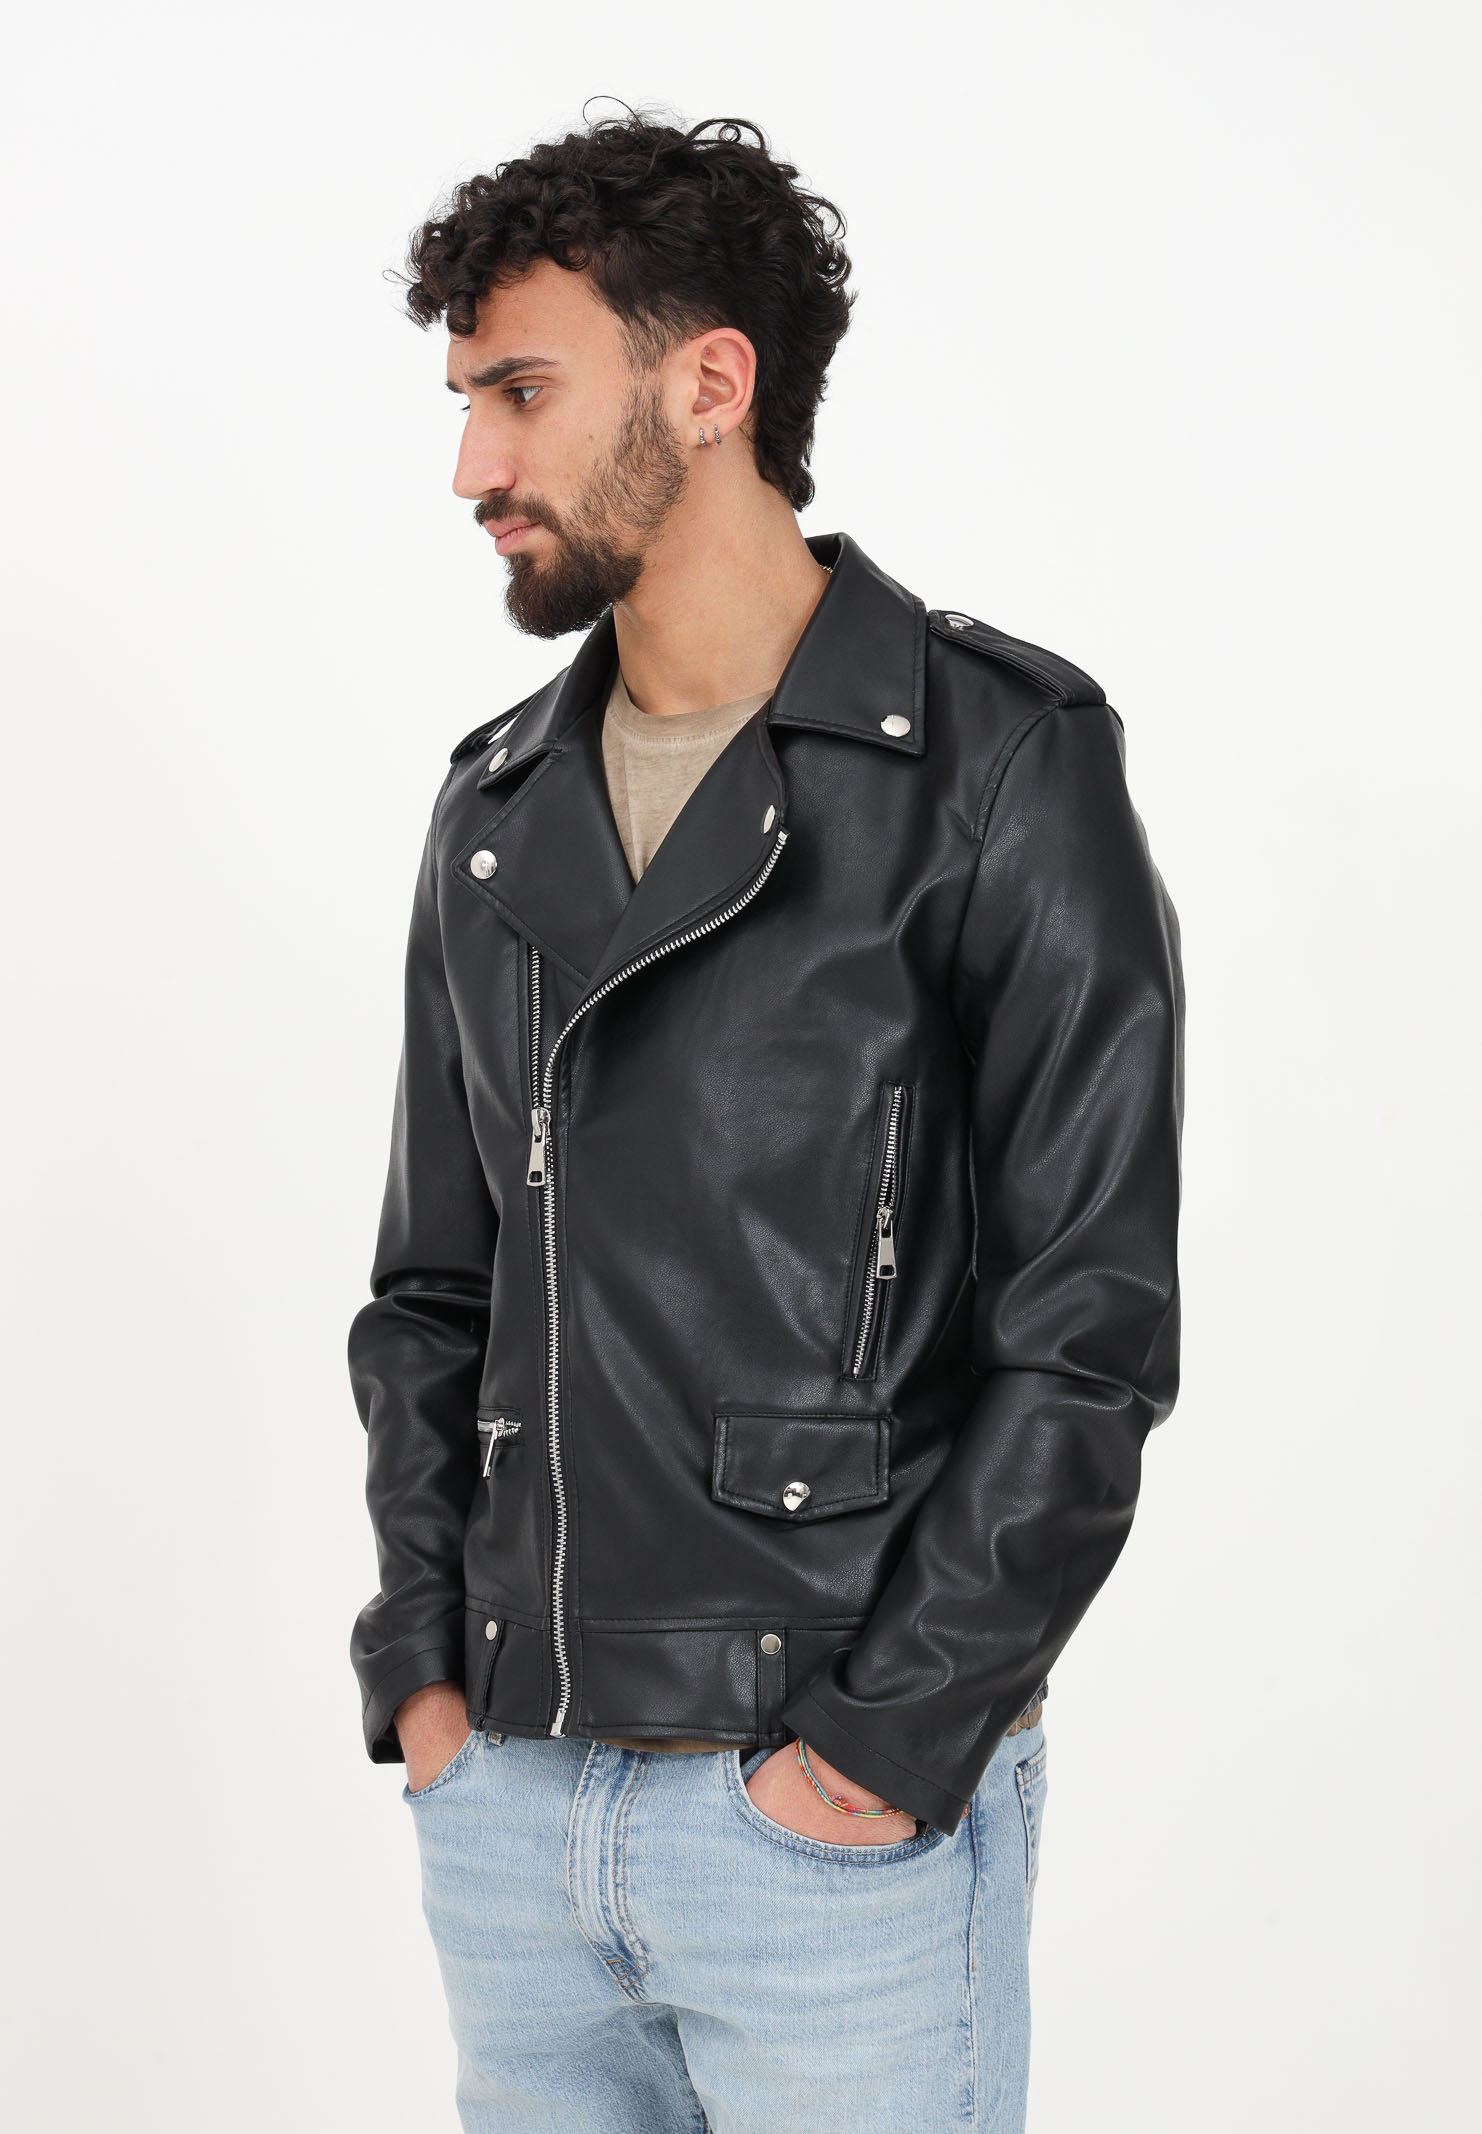 Black leather jacket for men FUTURE ALIVE | 000251NERO